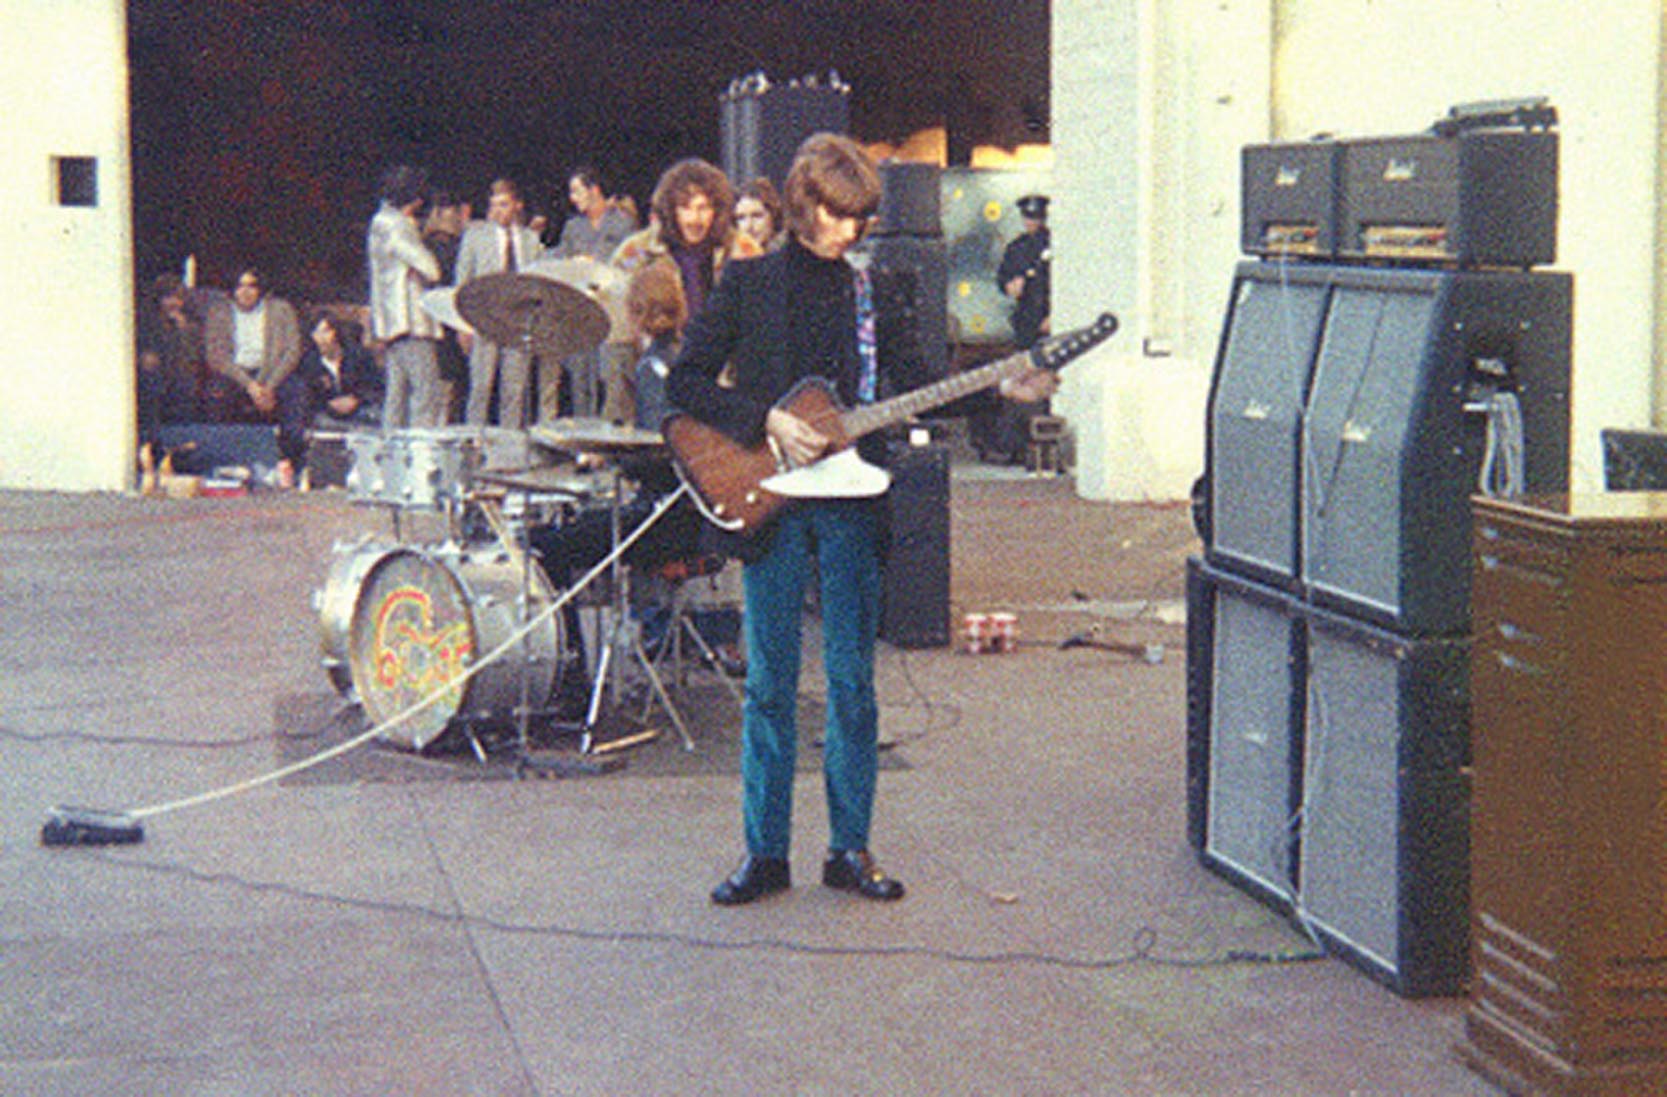 Clapton with Marshall plexi full stacks